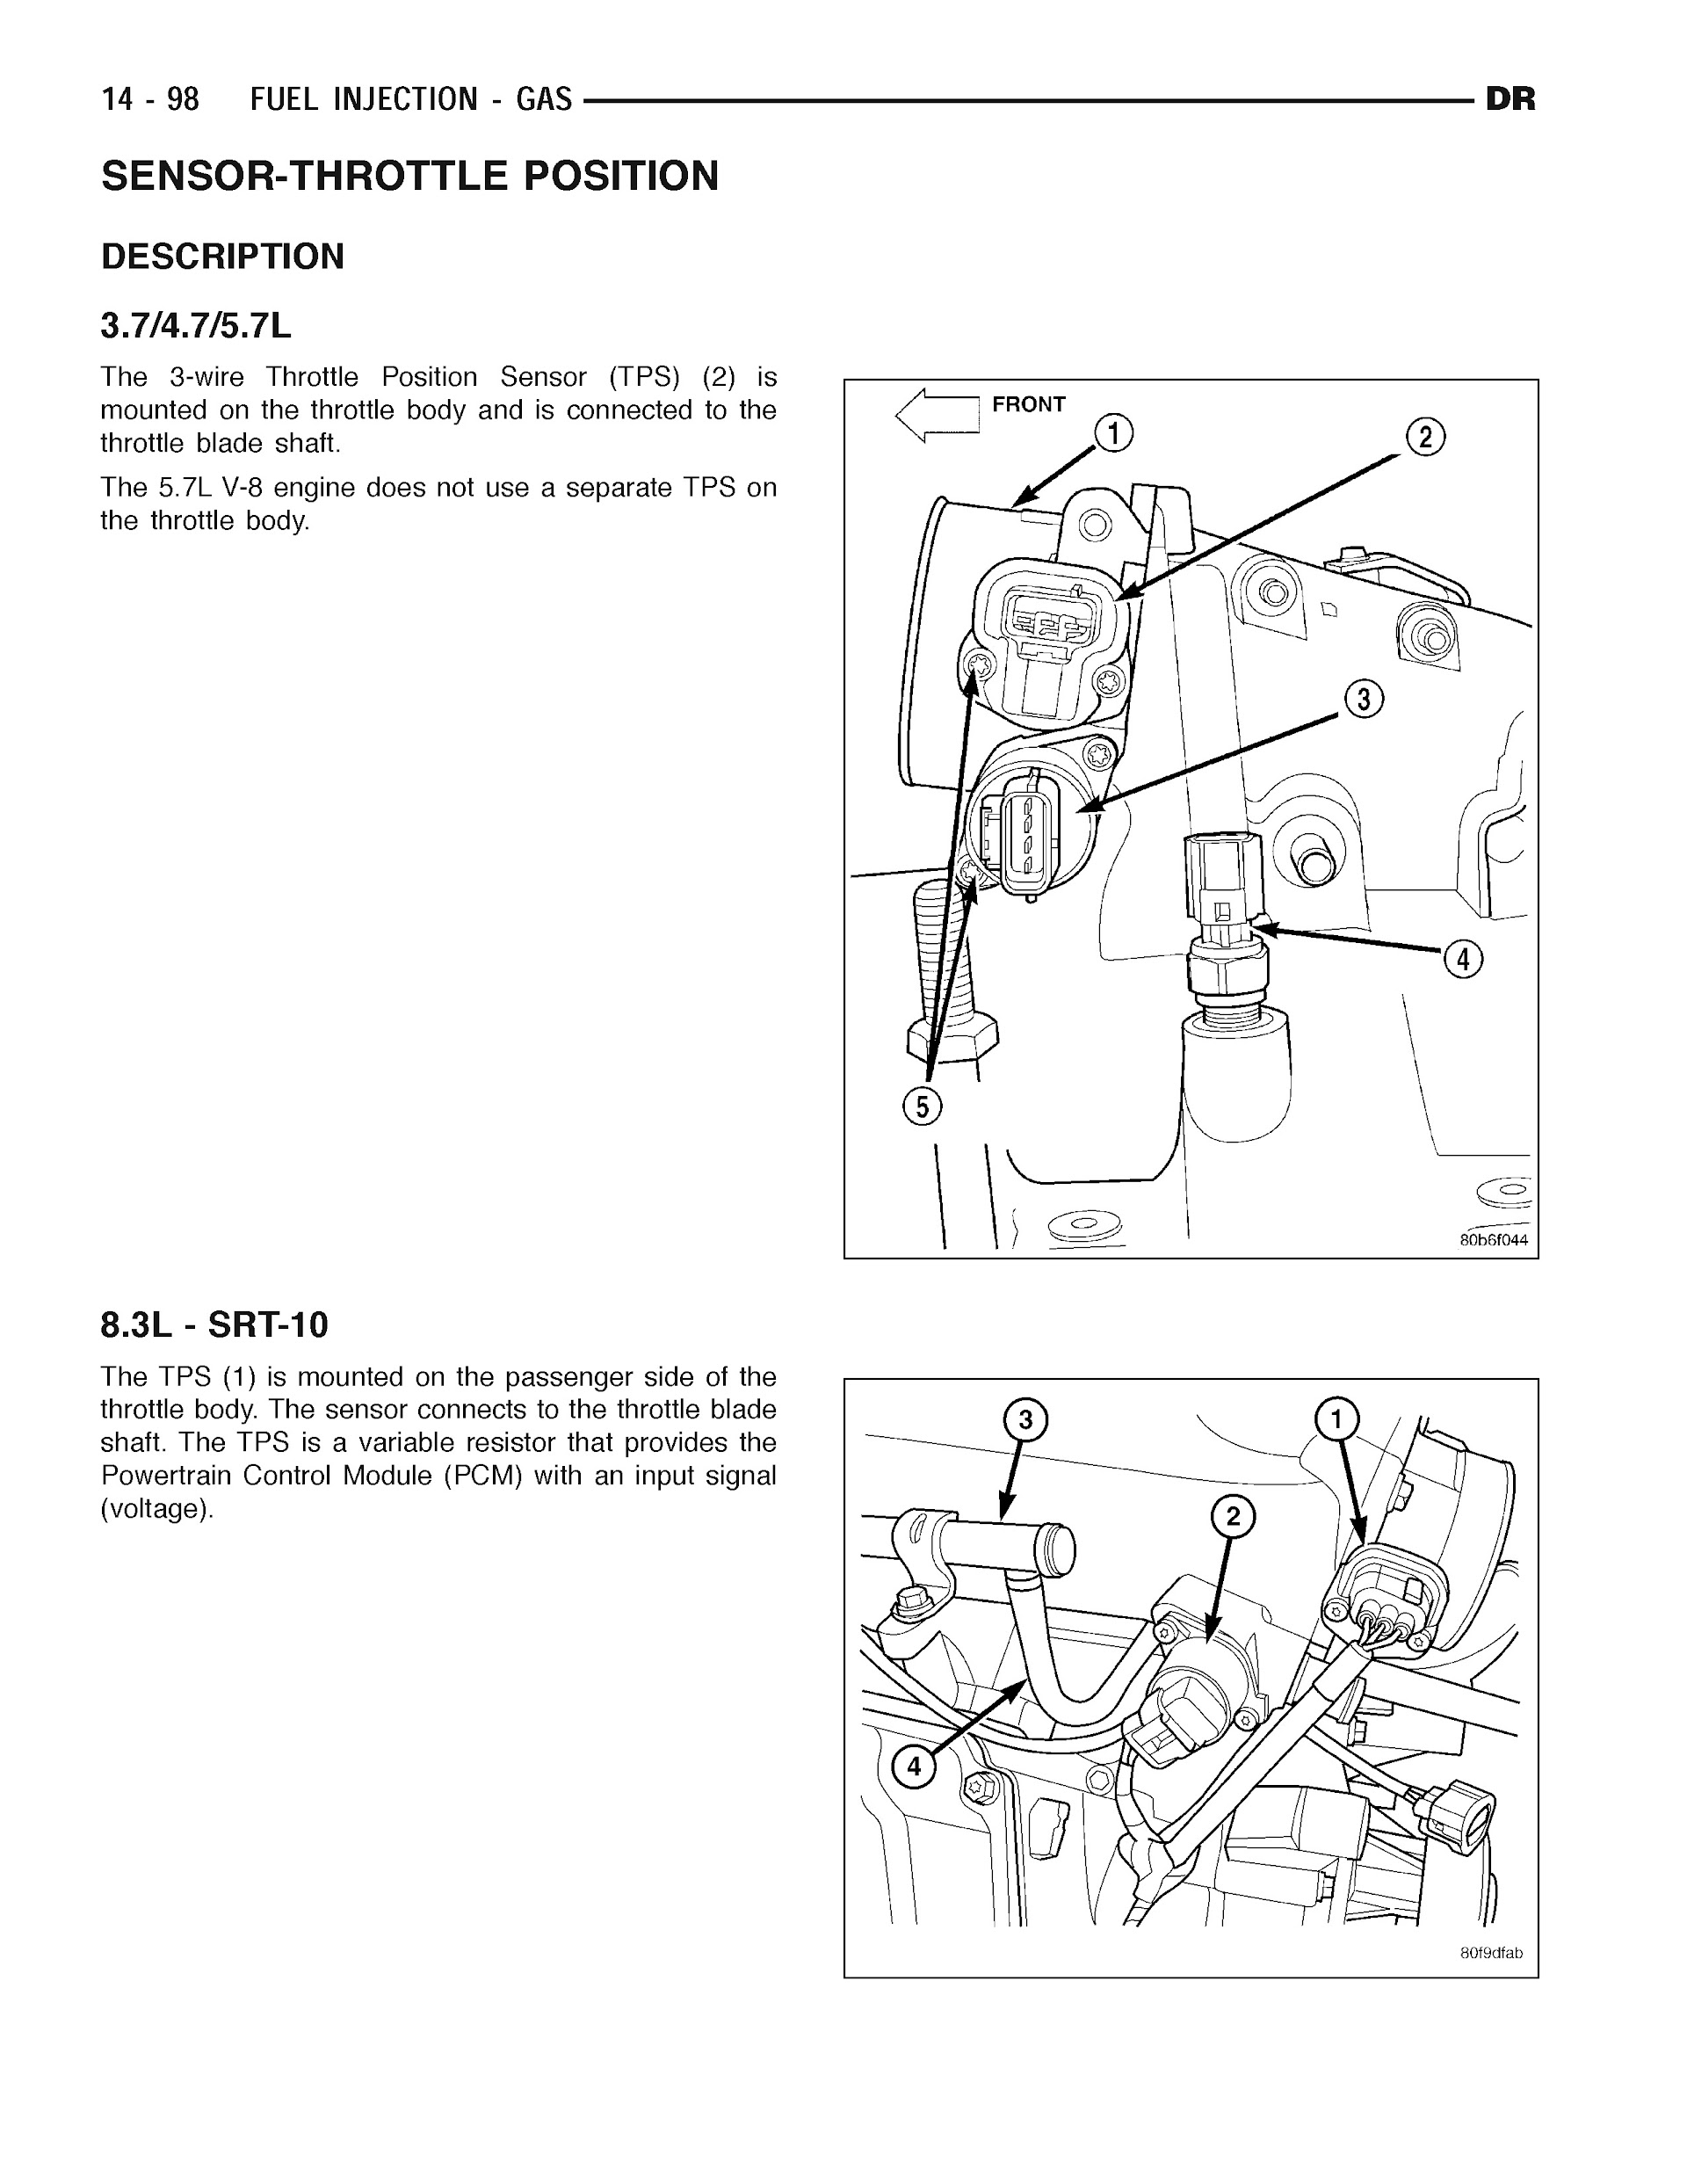 2007 Dodge RAM Repair Manual, Sensor - Throttle Position